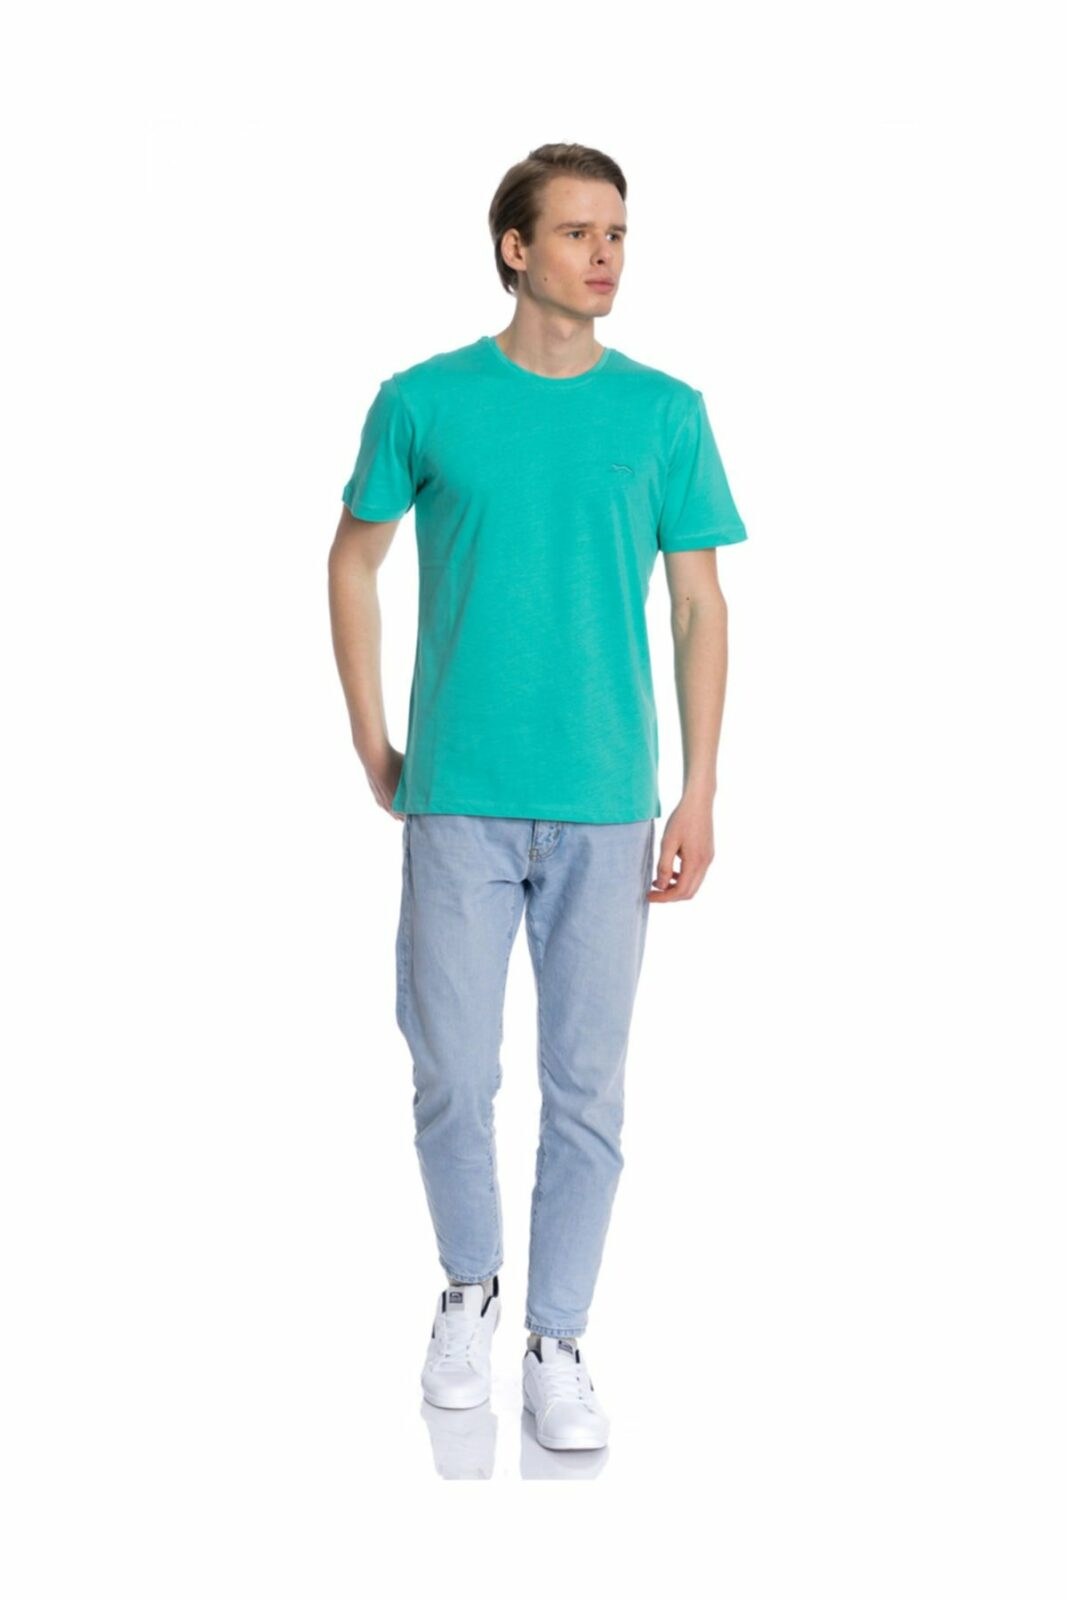 Slazenger Sports T-Shirt - Turquoise